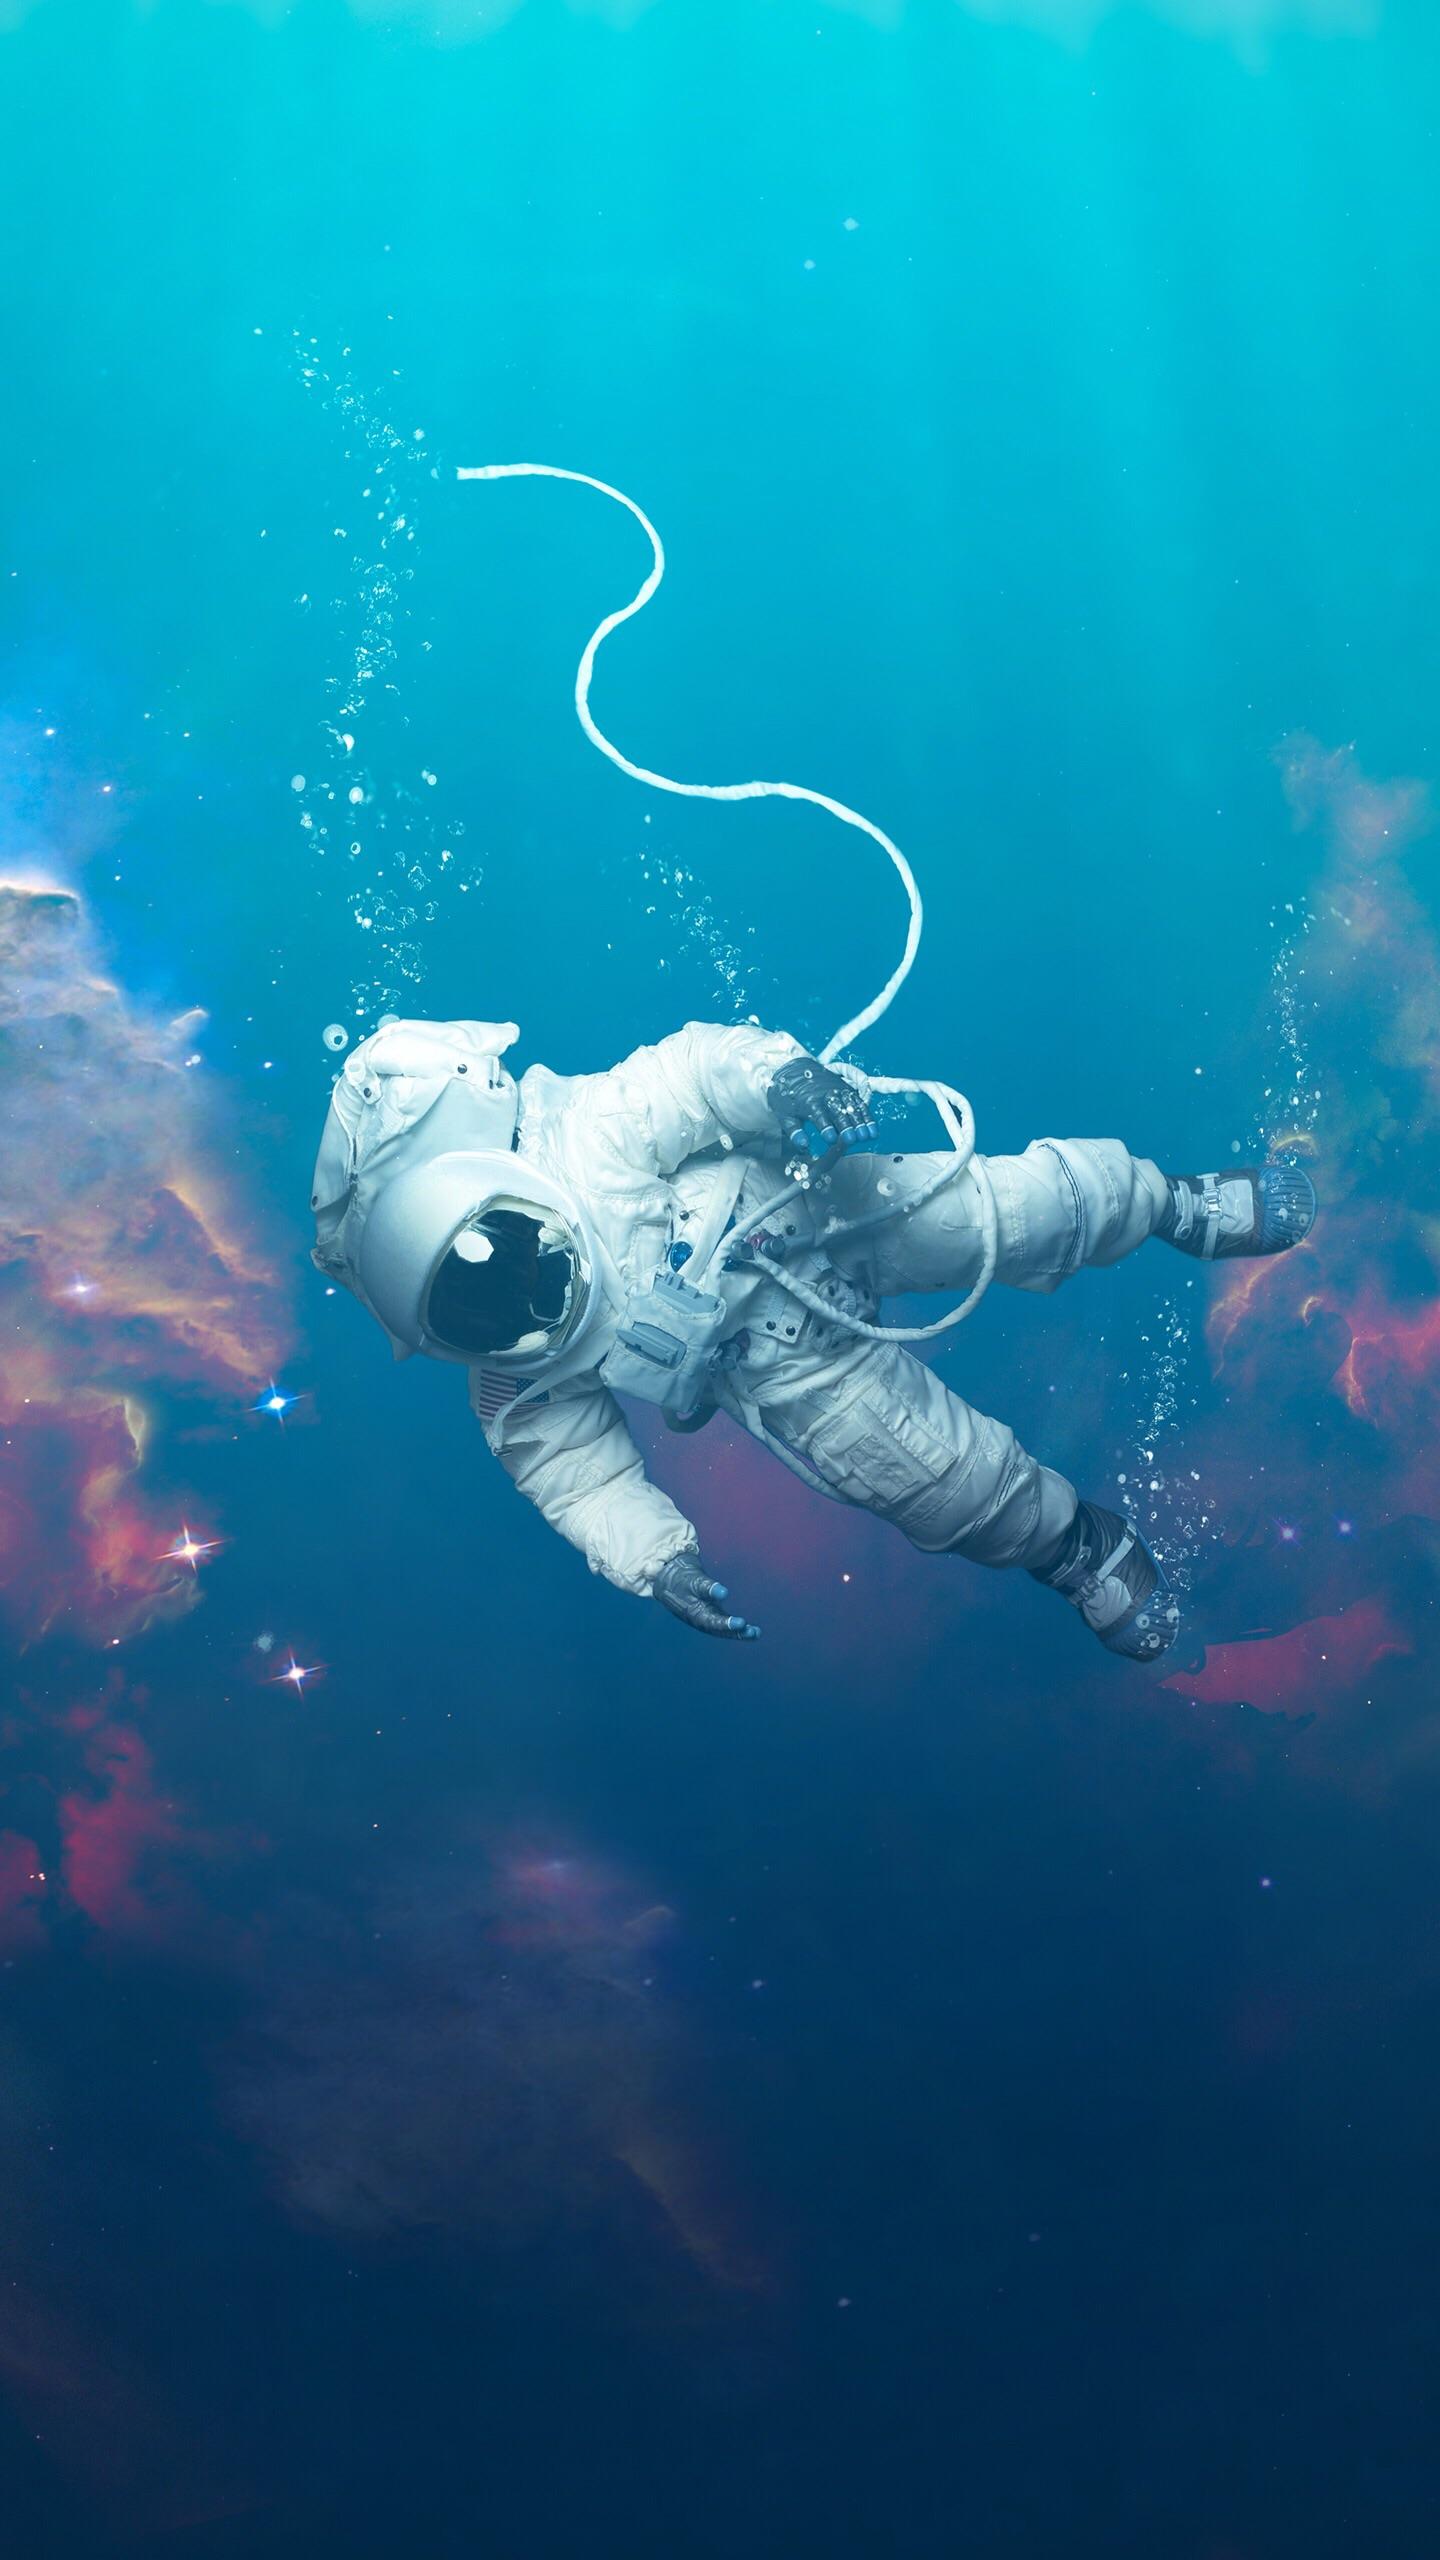 Sinking Astronaut Mobile Wallpaper Mobilewallpaper